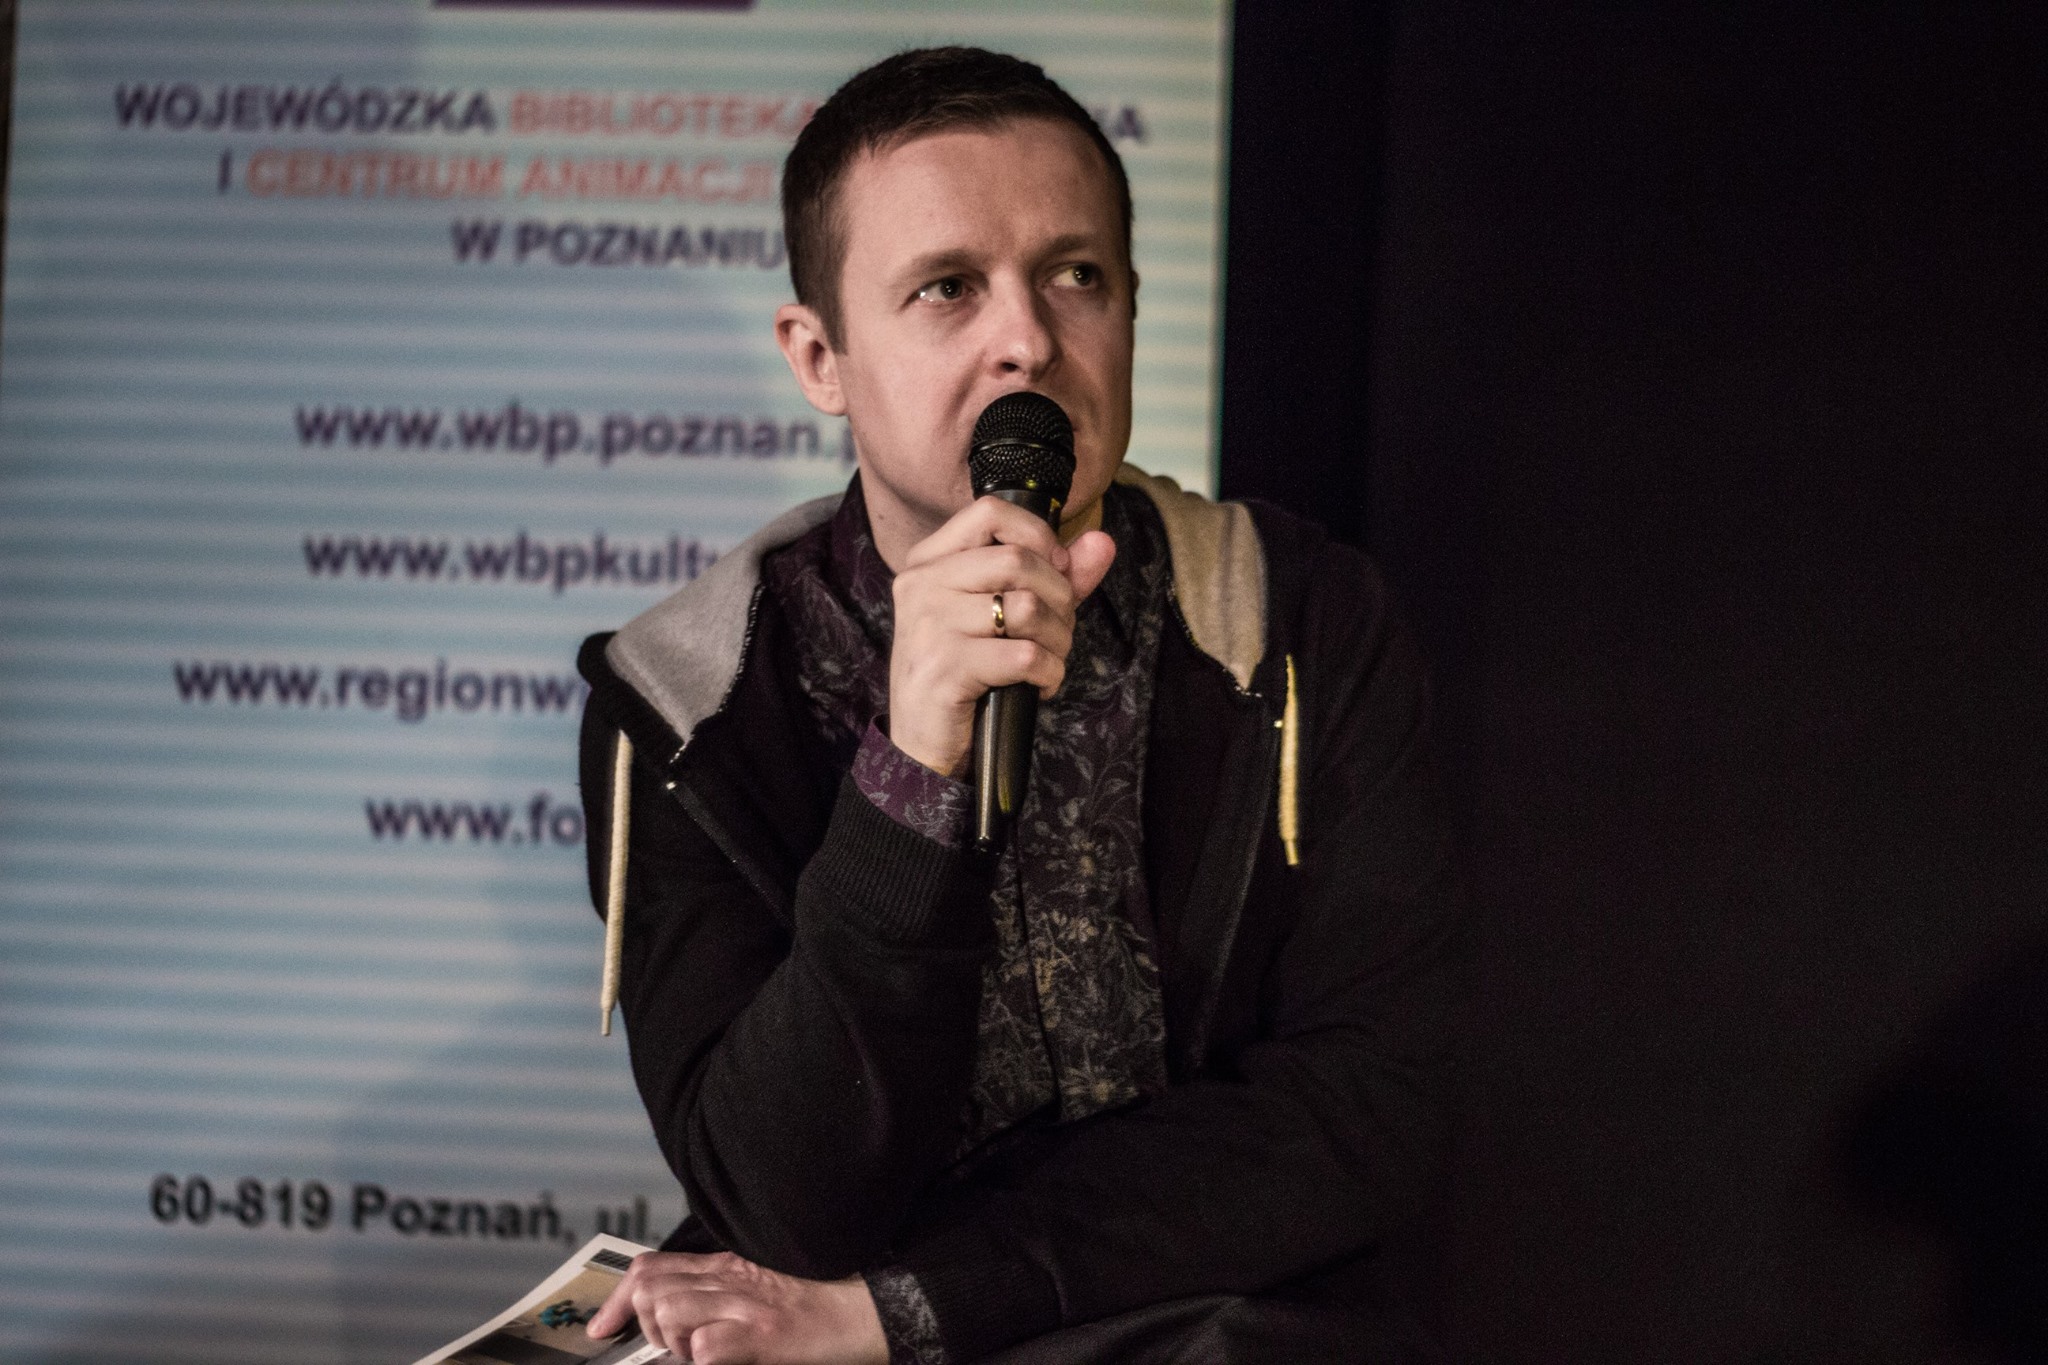 Fot. Patryk Skrzydlewski